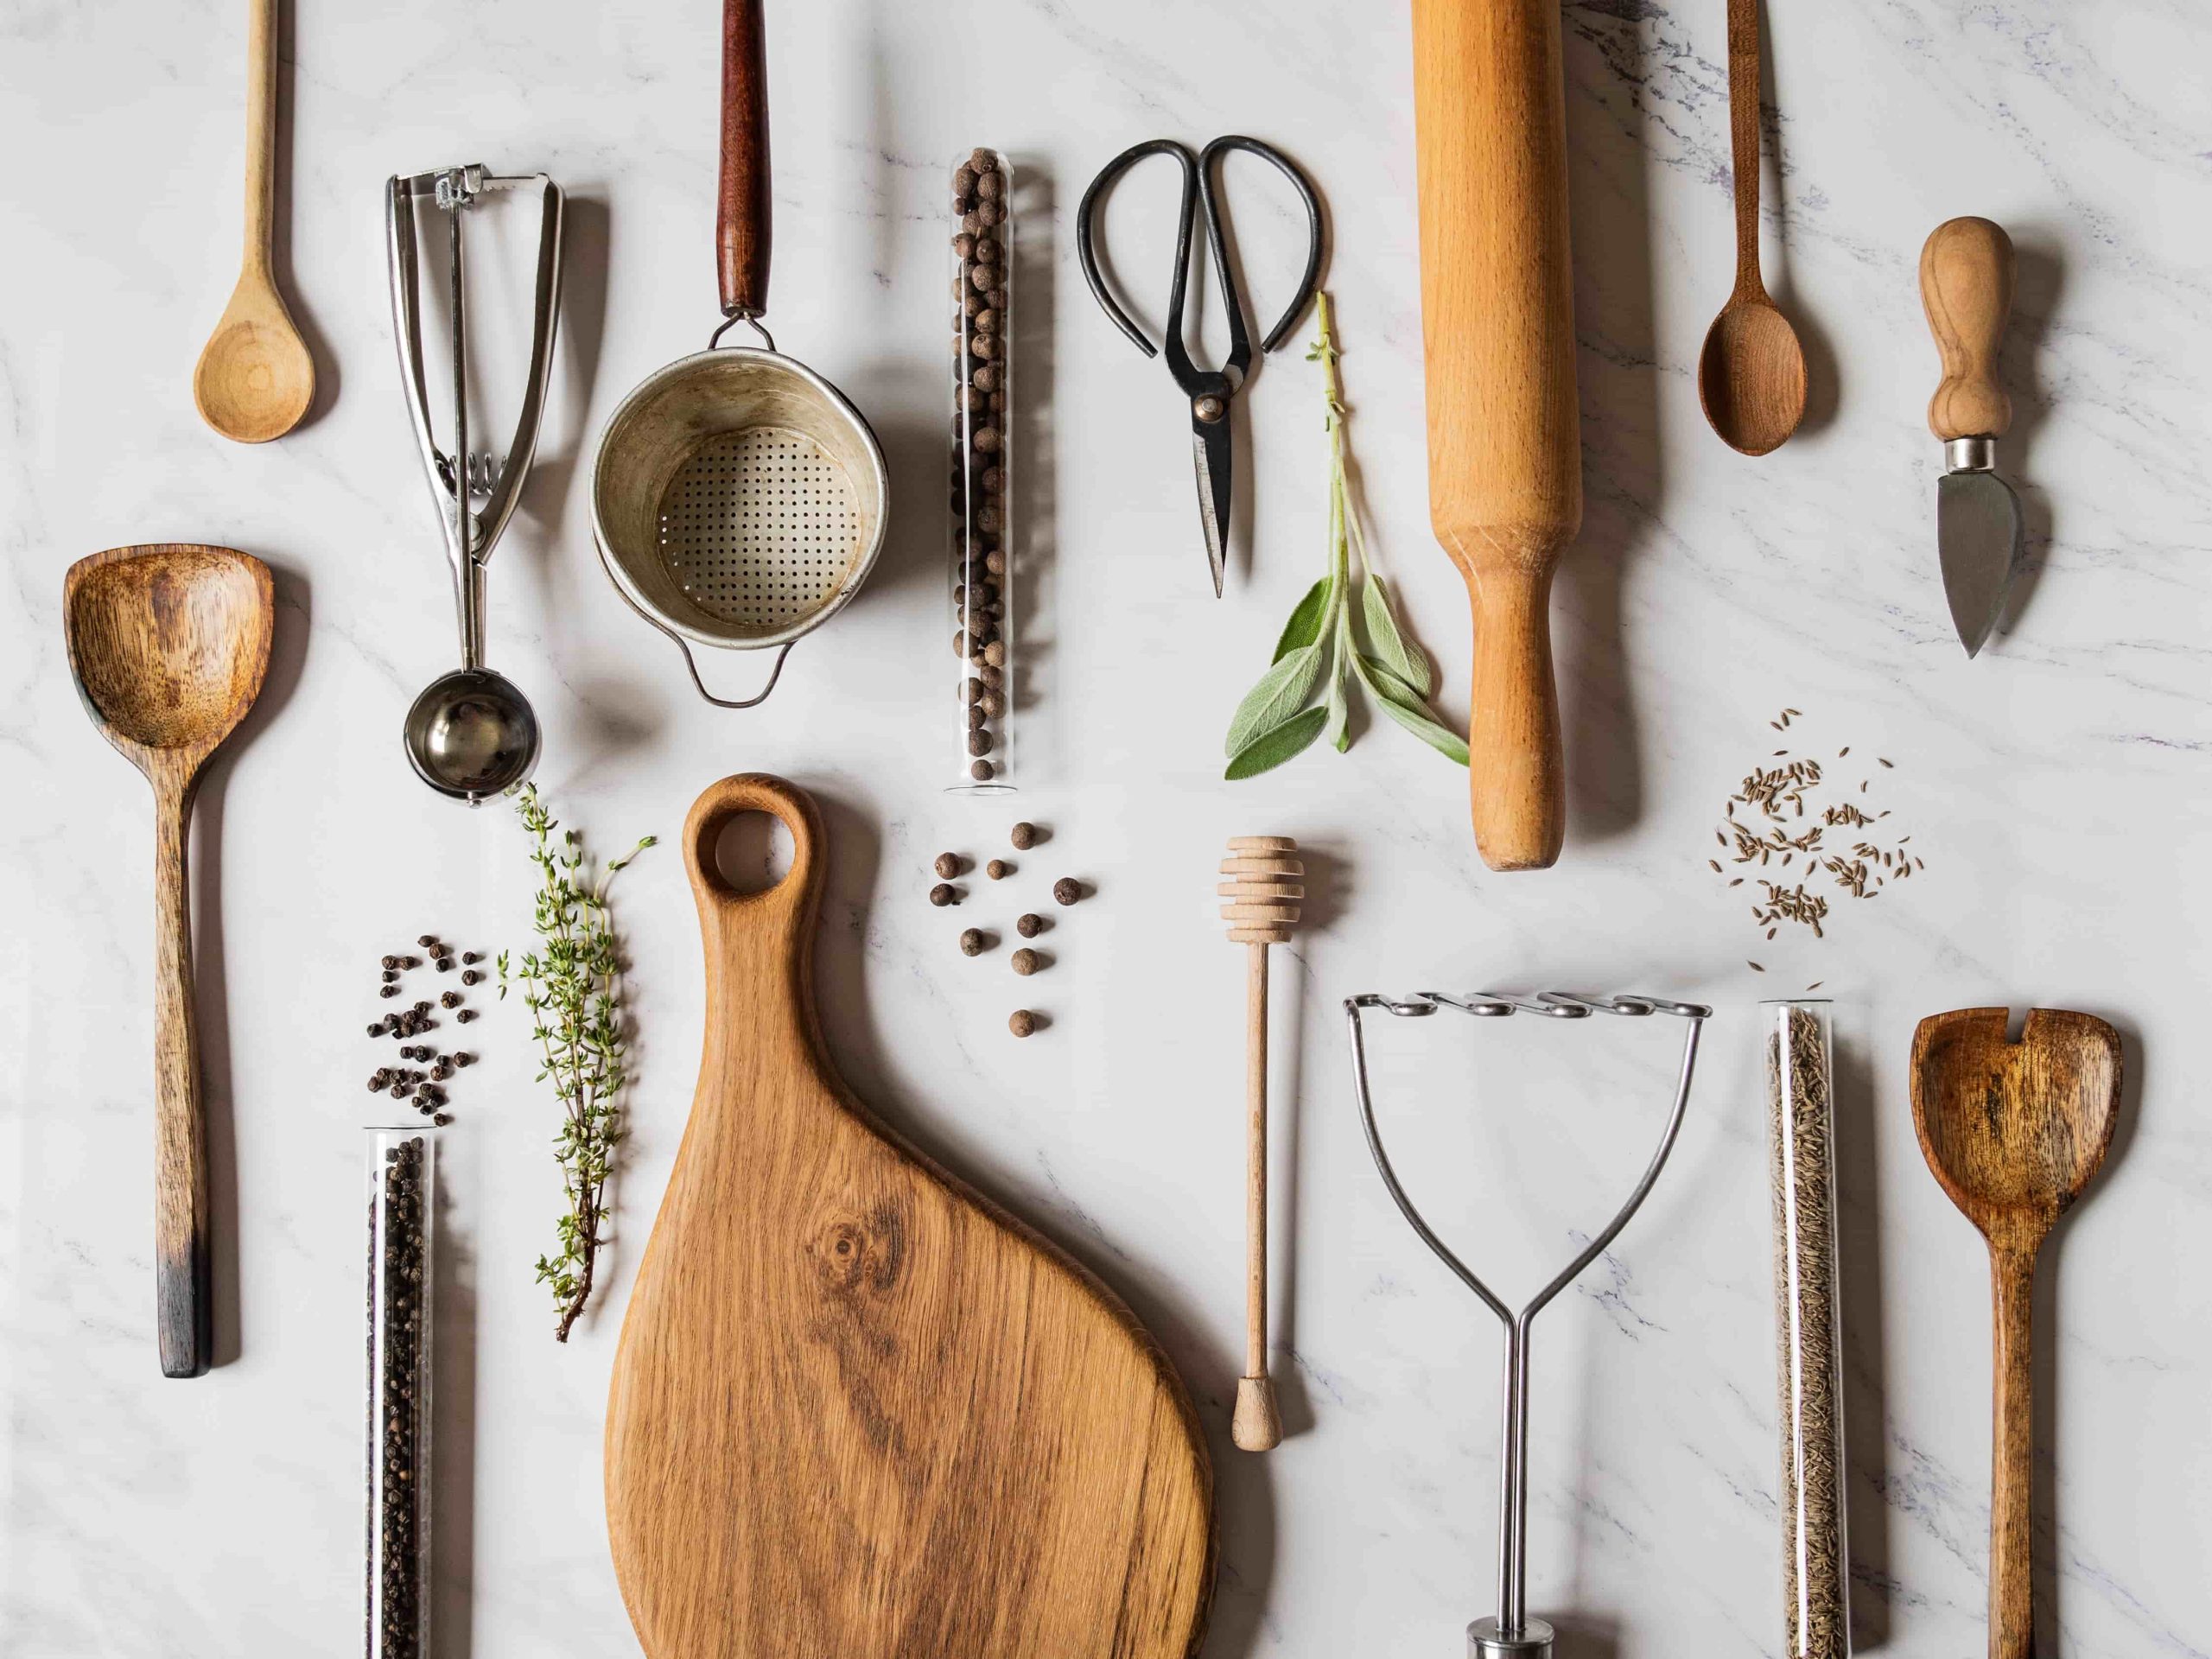 Ustensile de cuisine – Instrument à usage culinaire